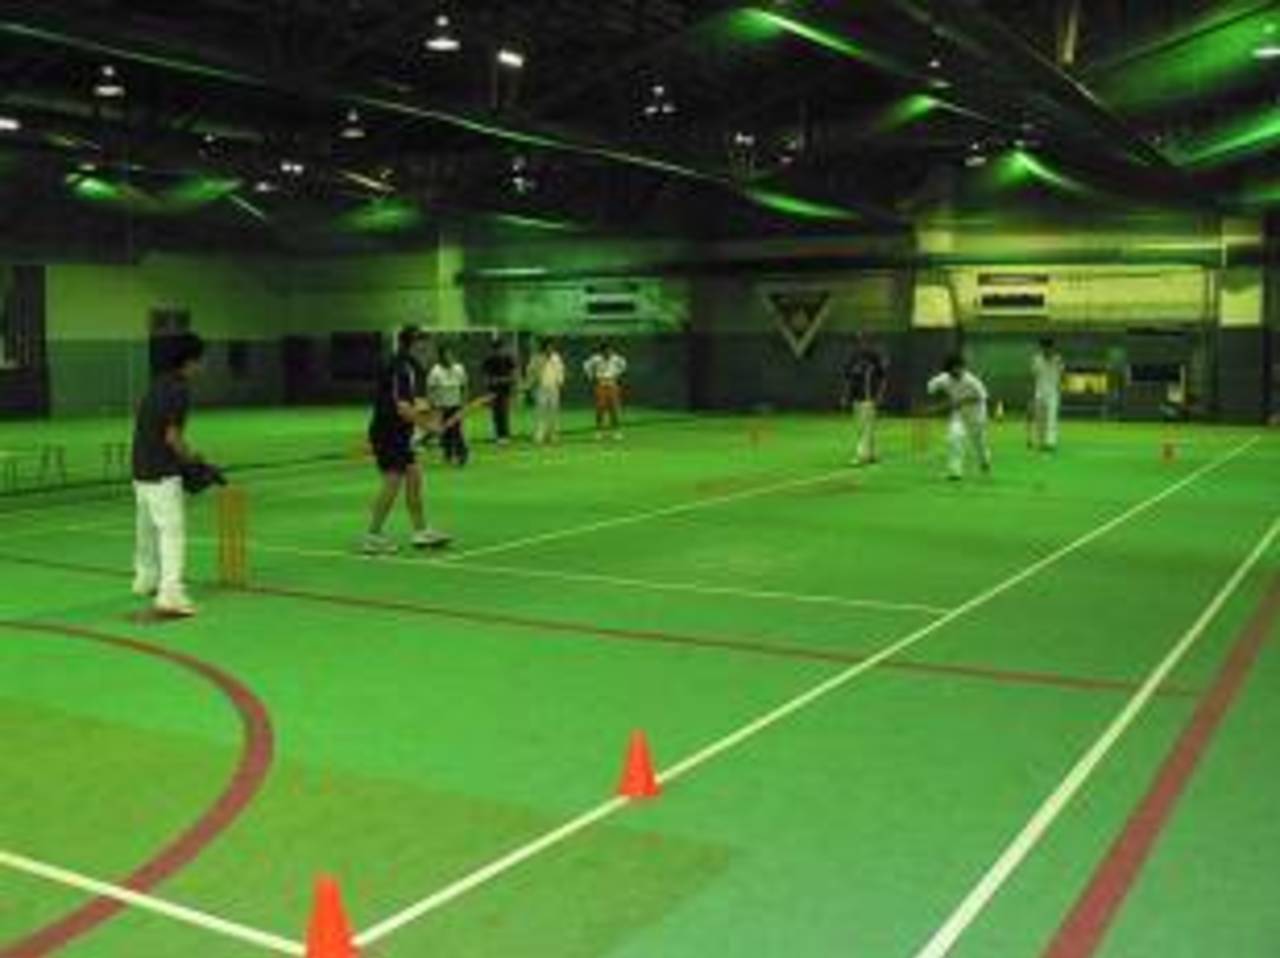 Practice facilities for cricket in Japan&nbsp;&nbsp;&bull;&nbsp;&nbsp;Alison Mitchell/ESPNcricinfo